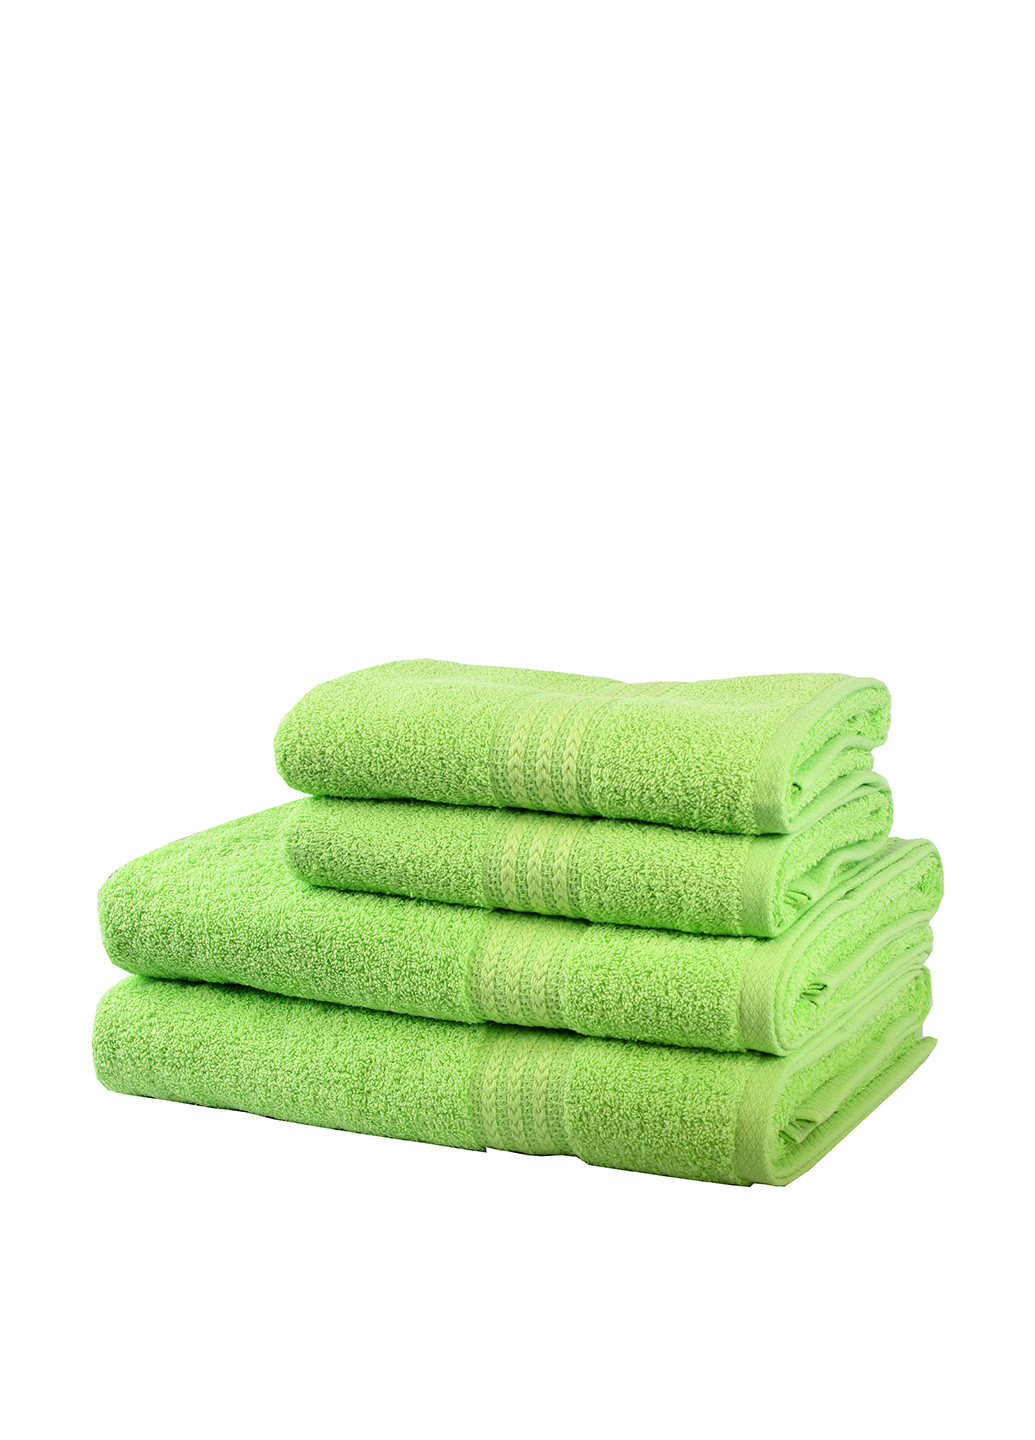 Hobby полотенце, 70х140 см полоска фисташковый производство - Турция